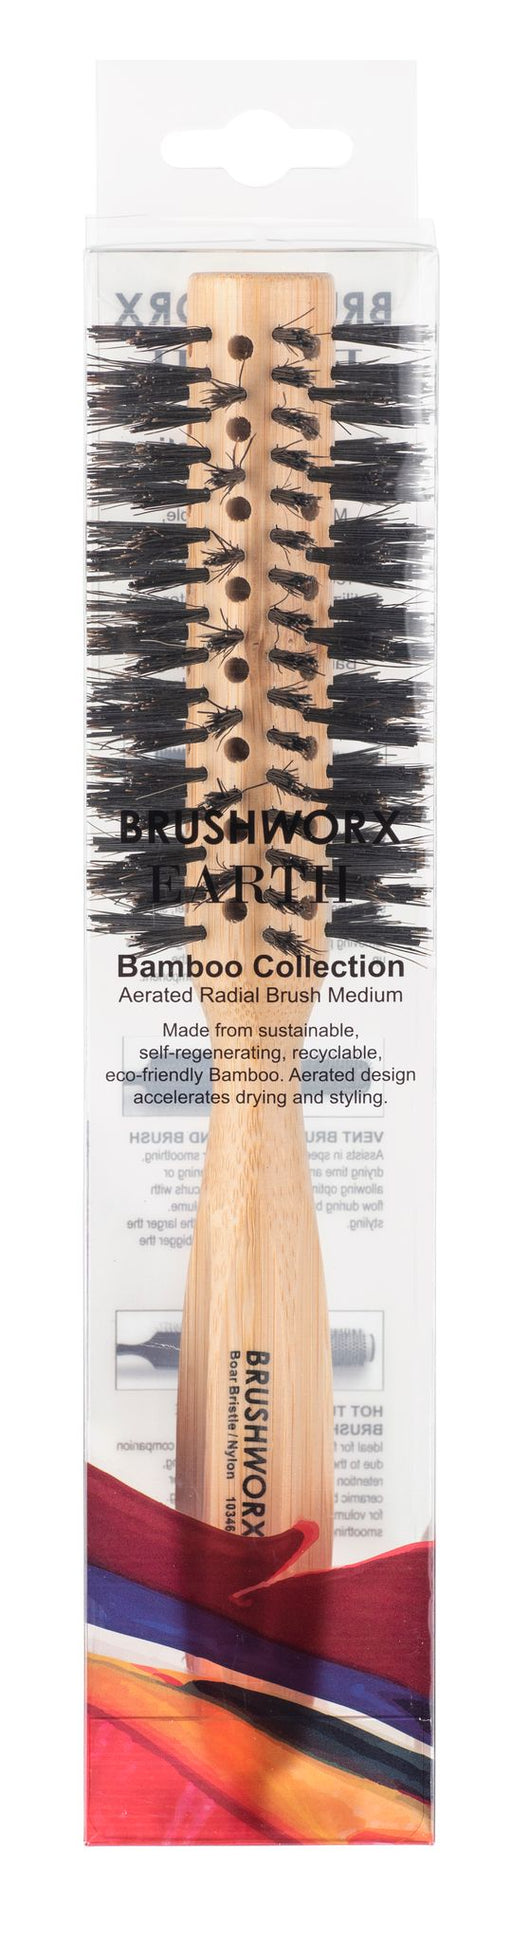 Brushworx Earth Bamboo Collection - Medium